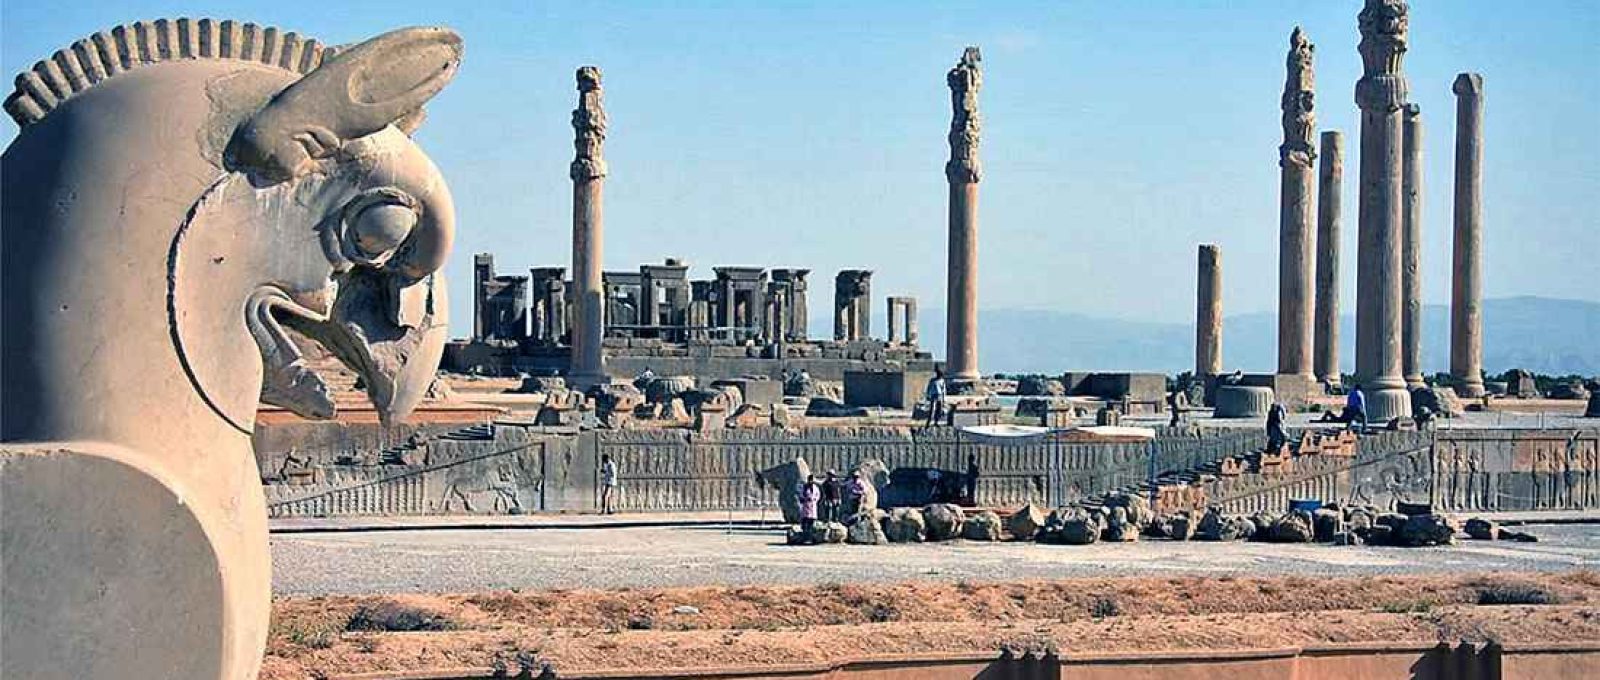 Ruínas de Persépolis (Getlstd/TripAdvisor).